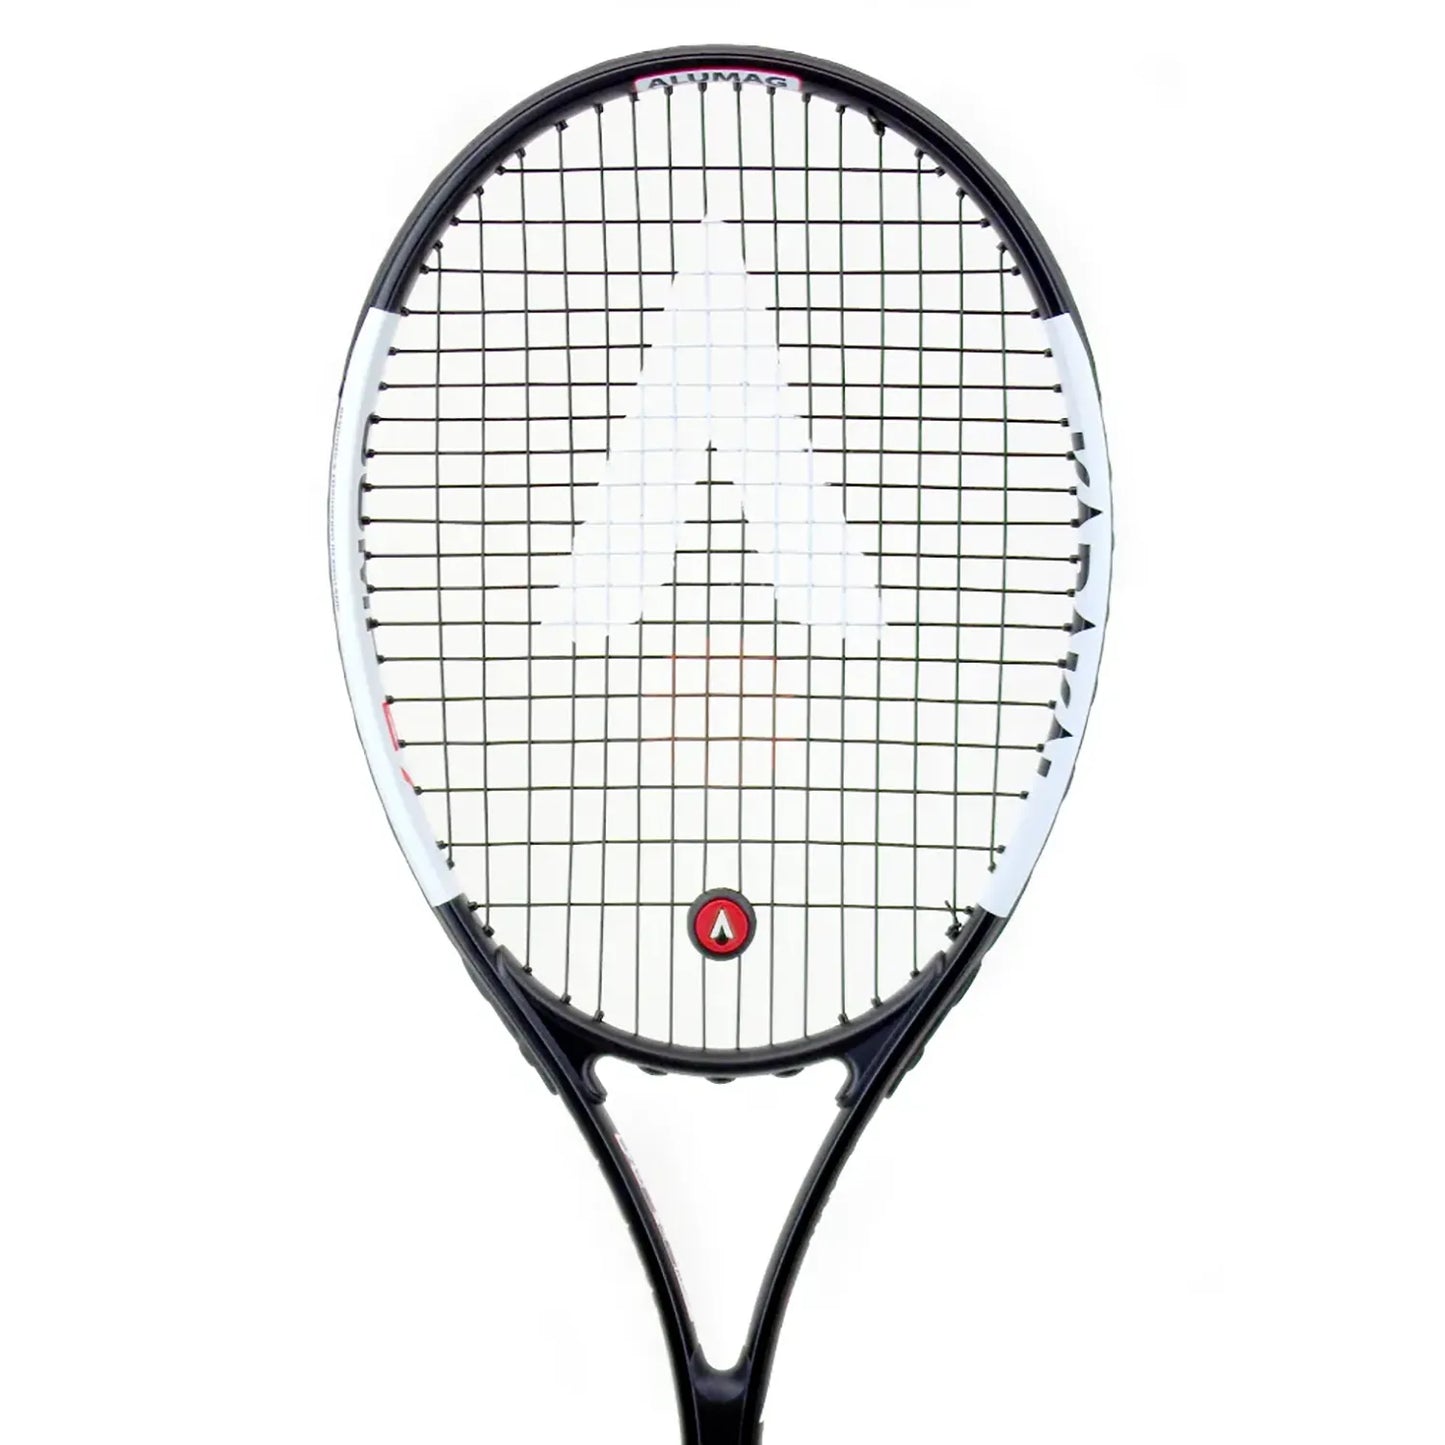 Karakal Comp 27 Tennis Racket